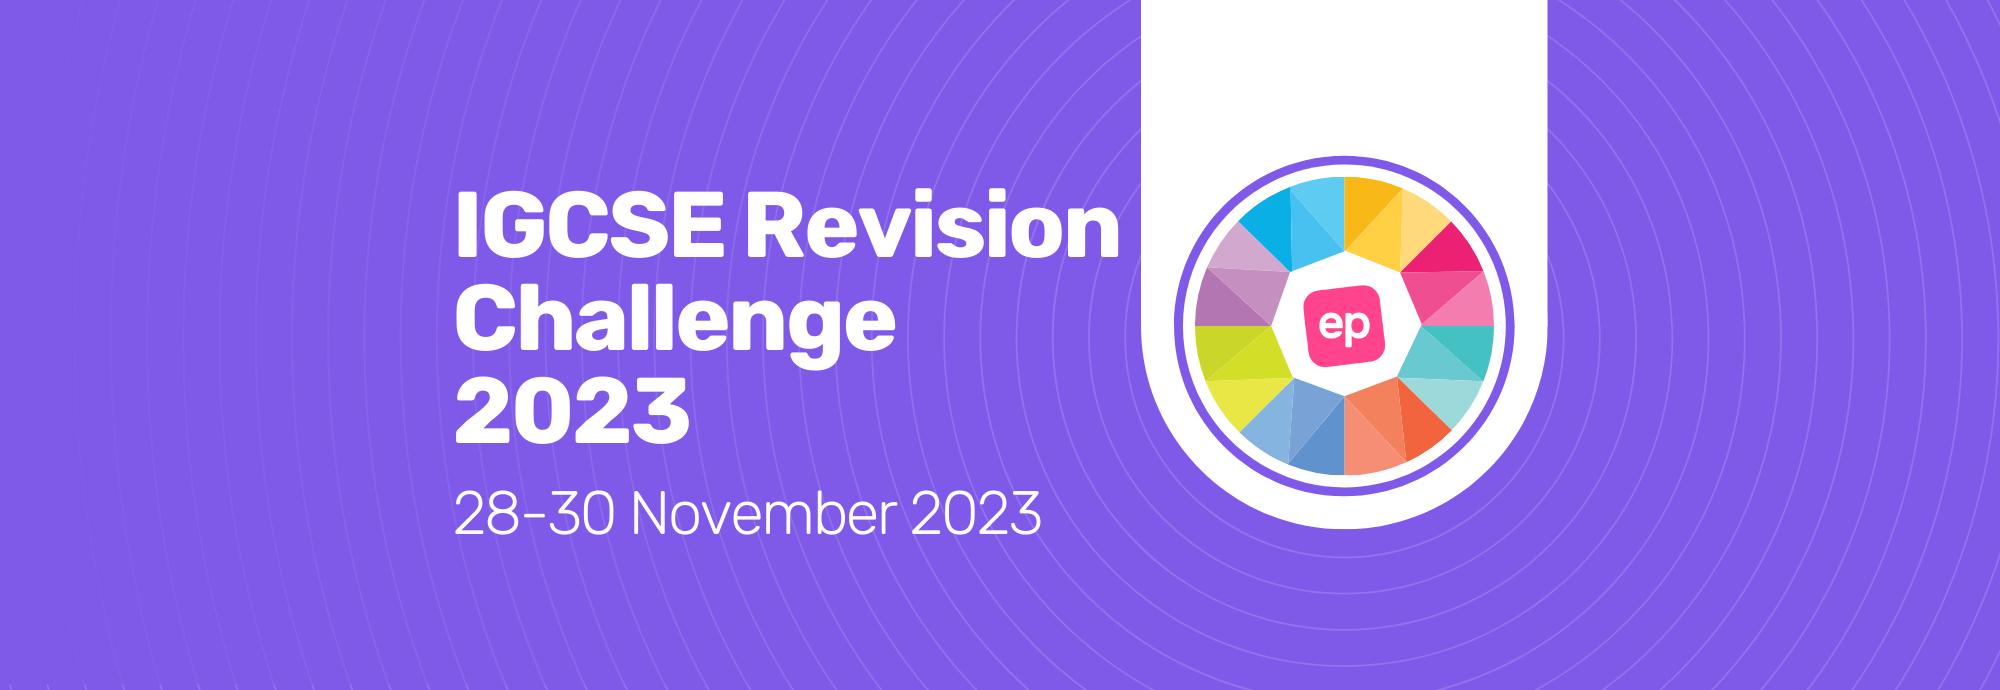 EP IGCSE Revision Challenge 2023